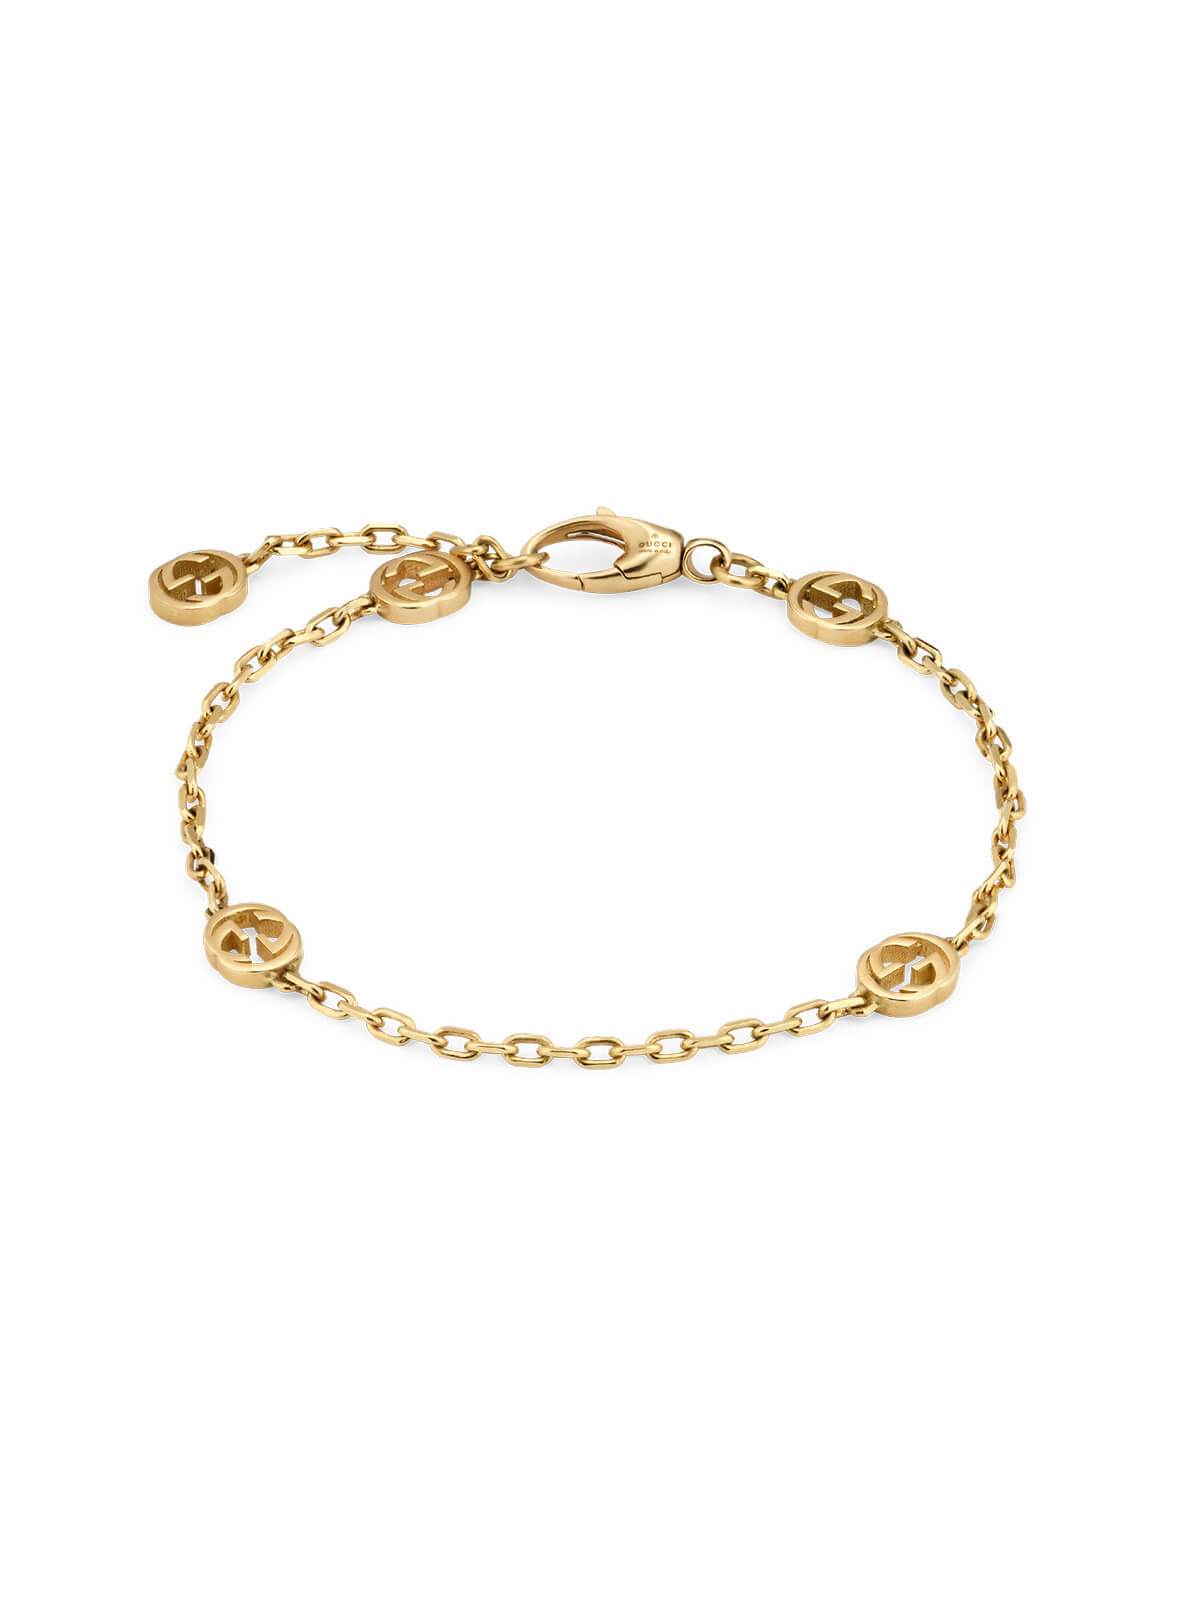 Gucci Interlocking G Bracelet in 18ct Yellow Gold YBA629904001017